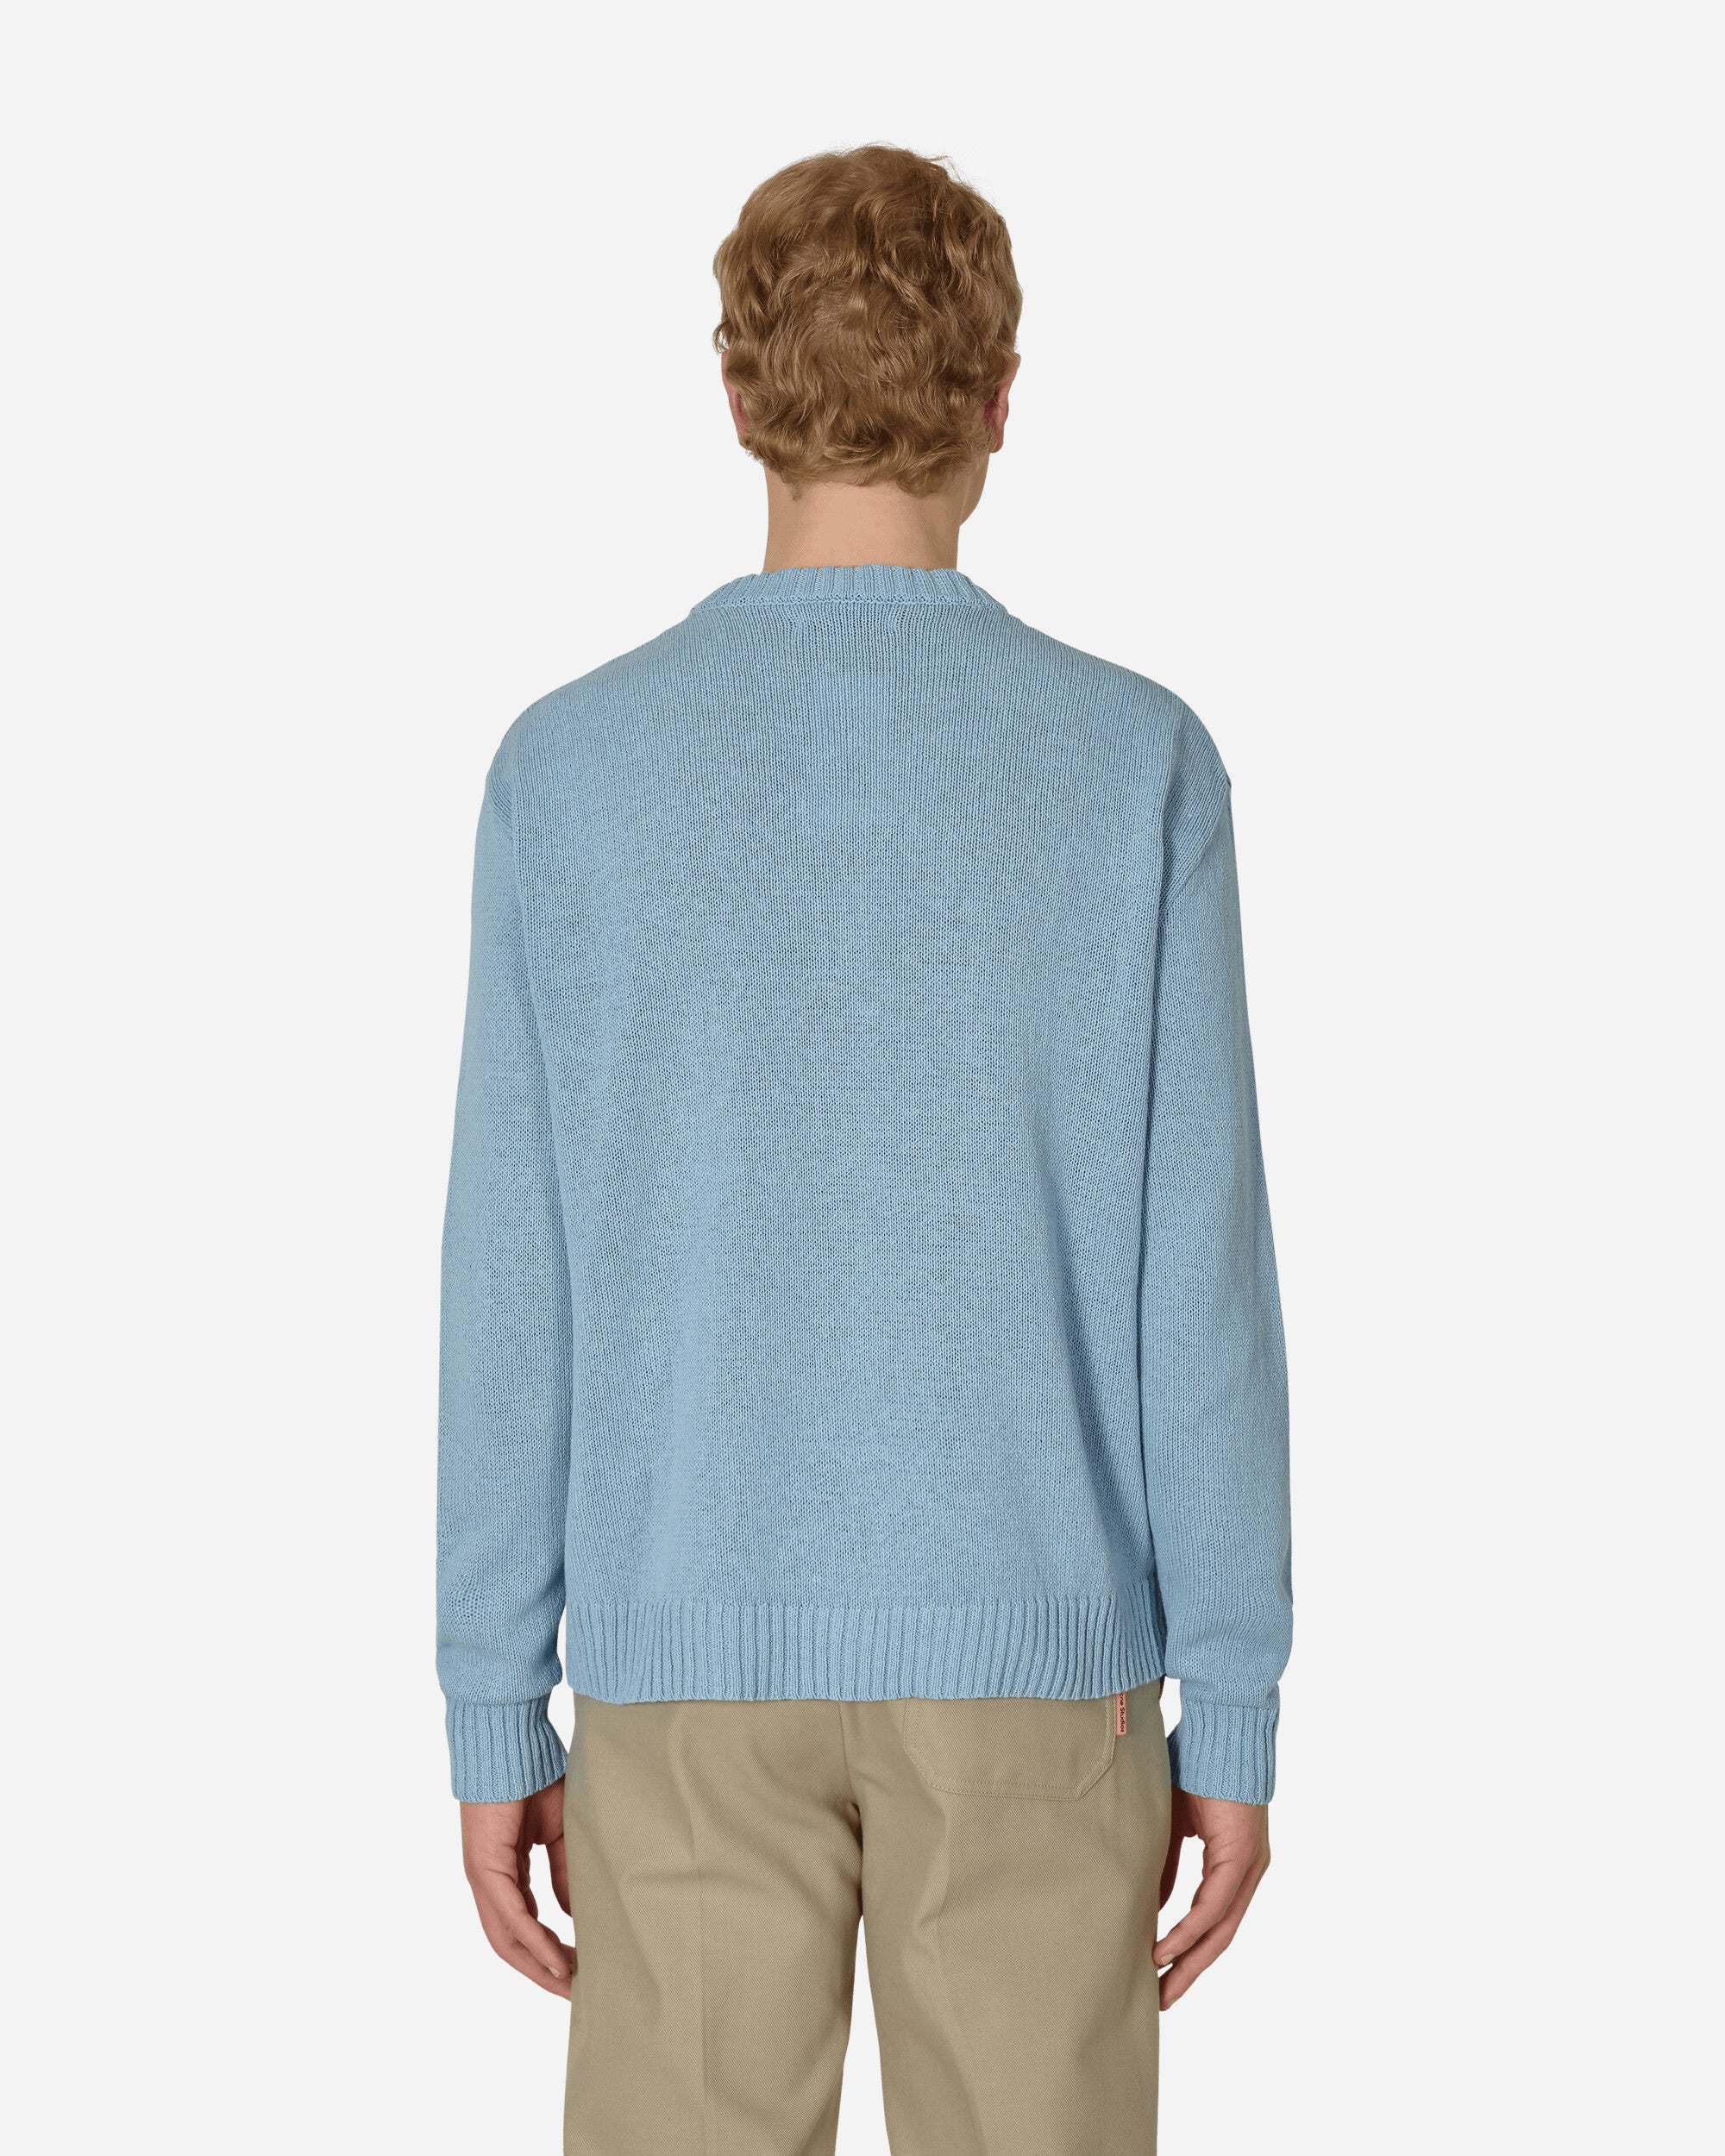 Sky High Farm Unisex Recycled Cotton Intarsia Sweater Knit Light Blue Knitwears Sweaters SHF03N001 1